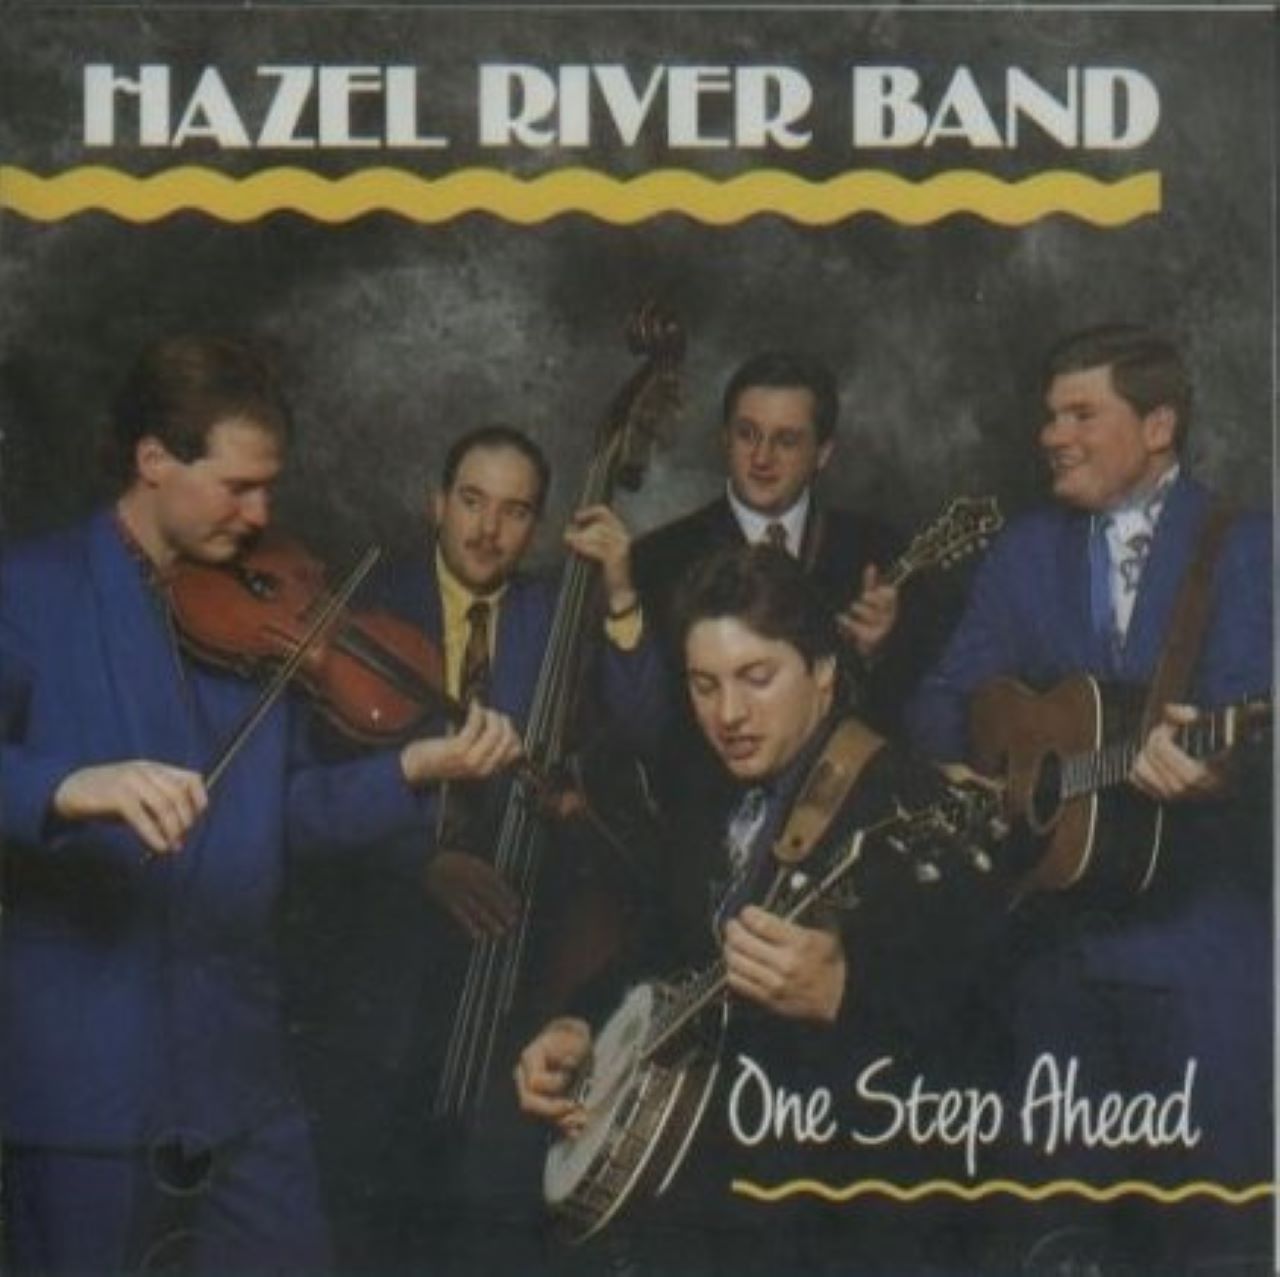 Hazel River Band - One Step Ahead cover album